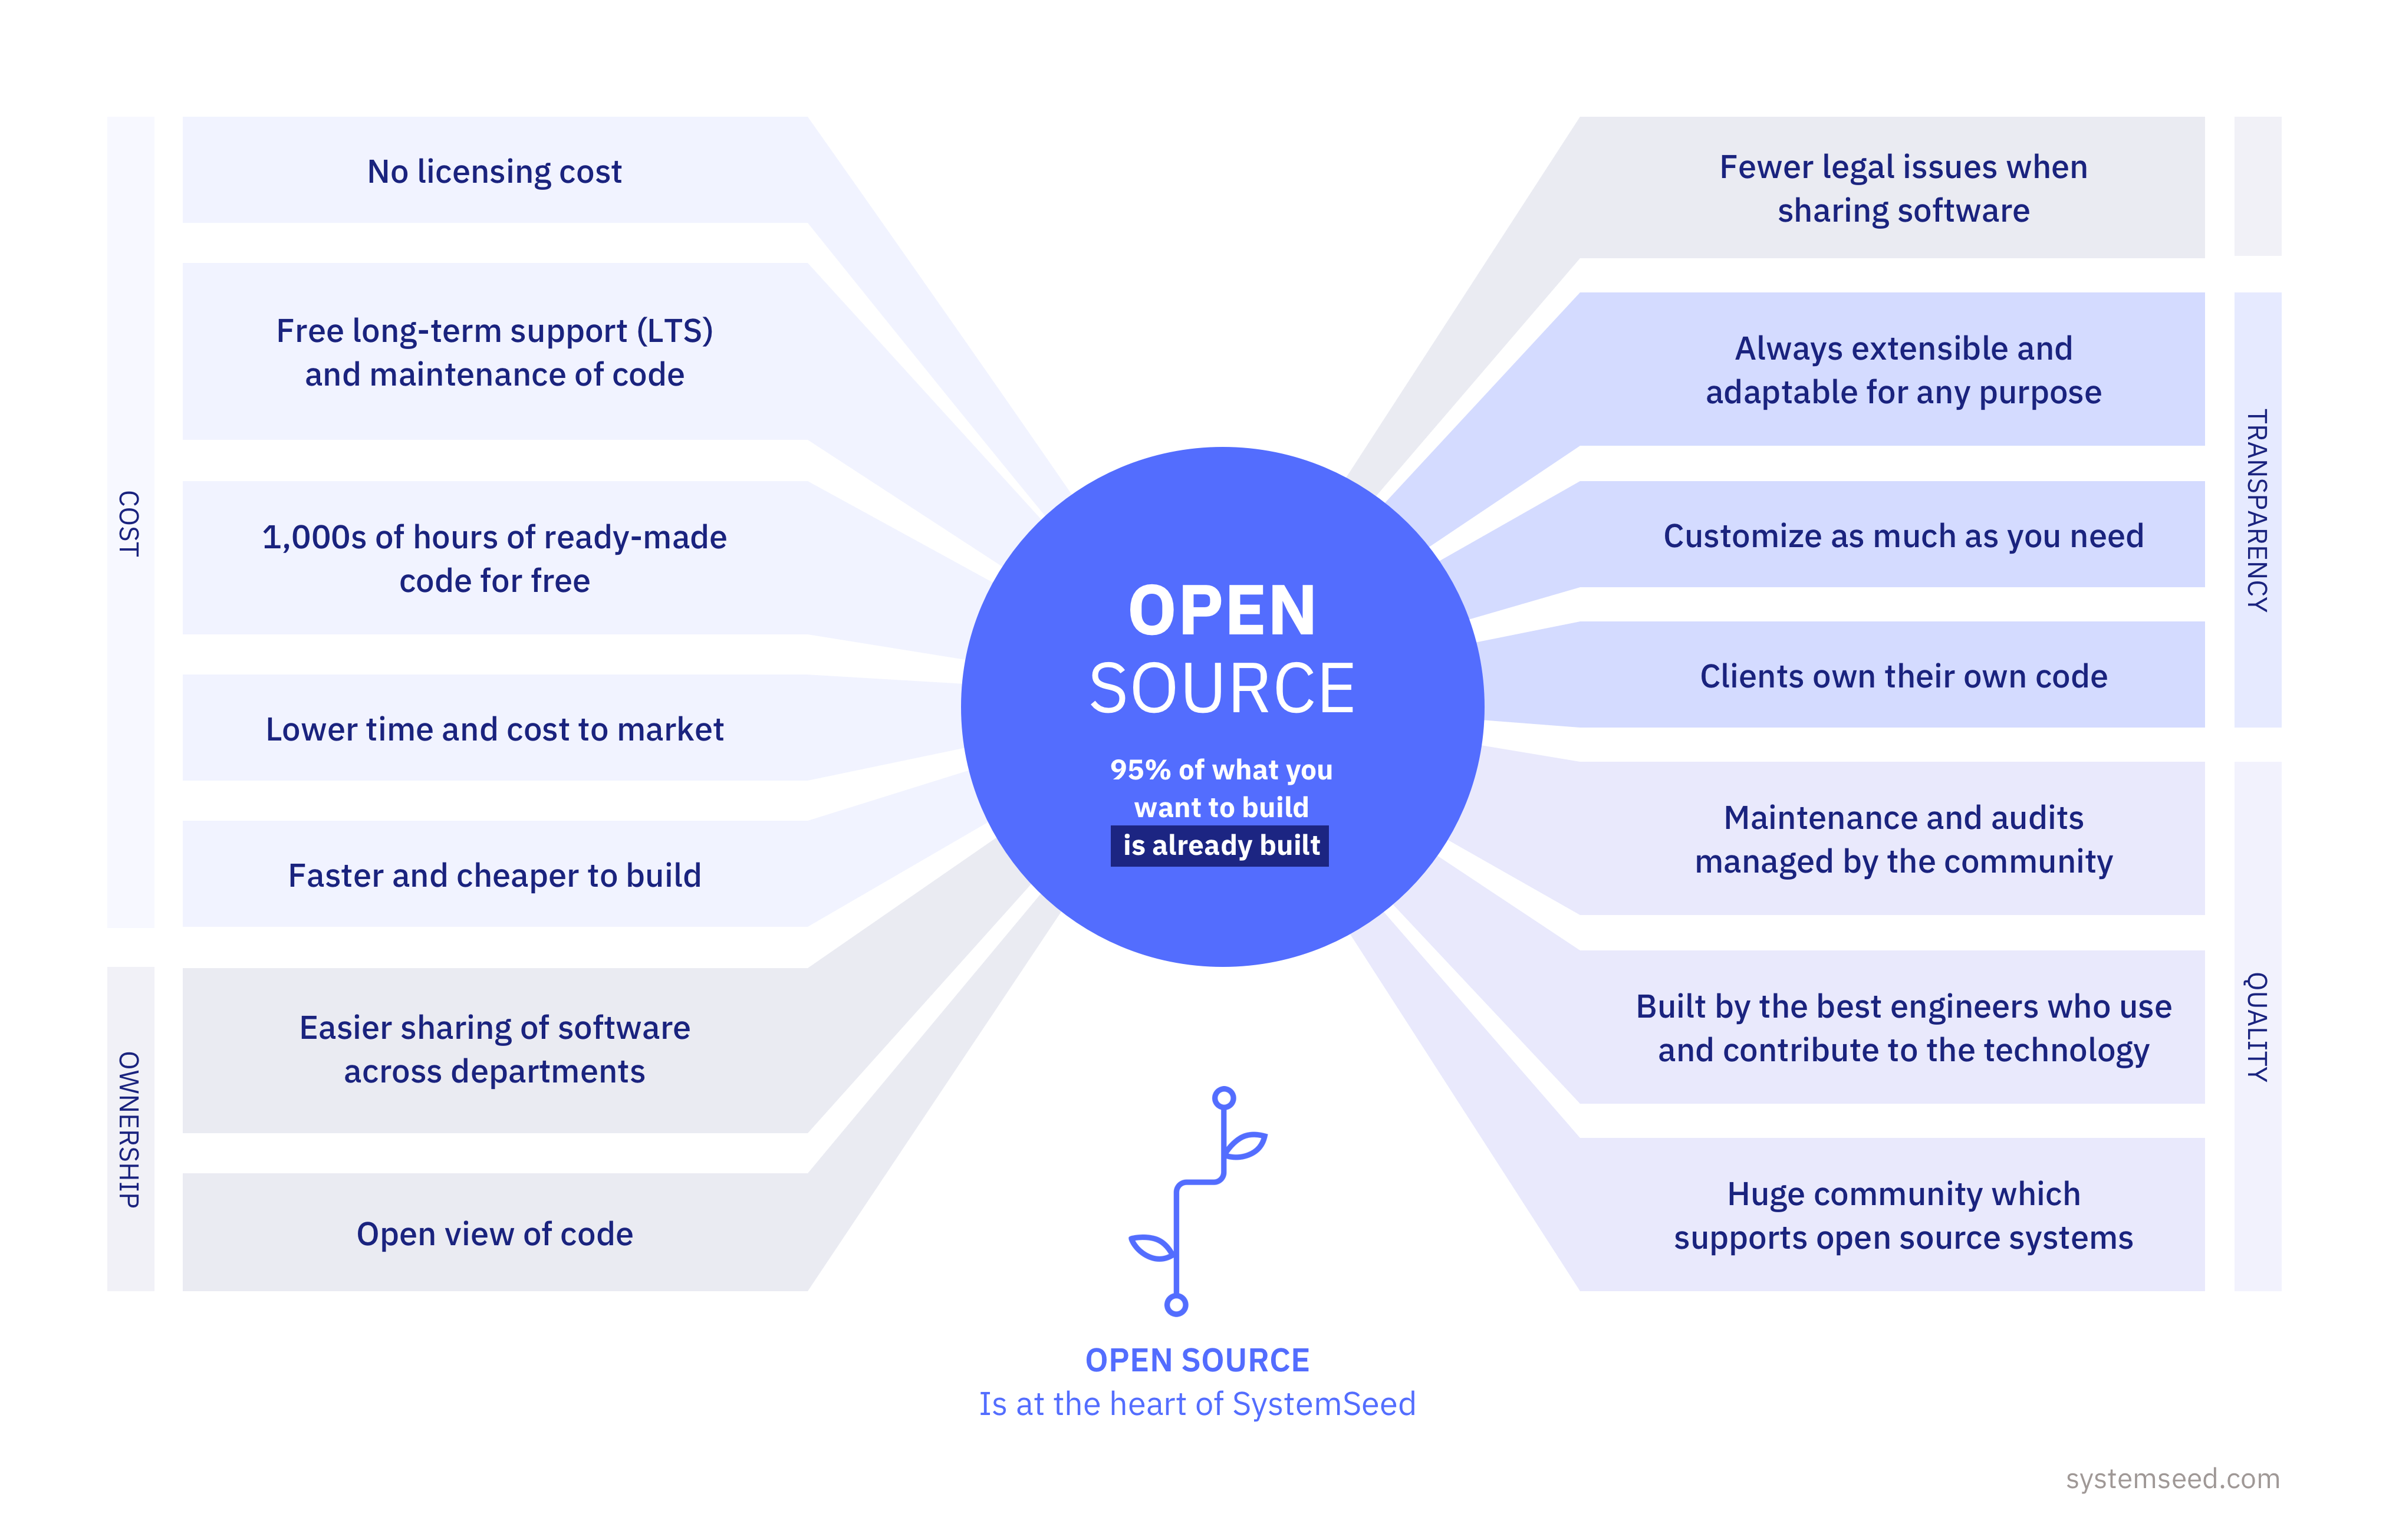 Open source web development agency SystemSeed